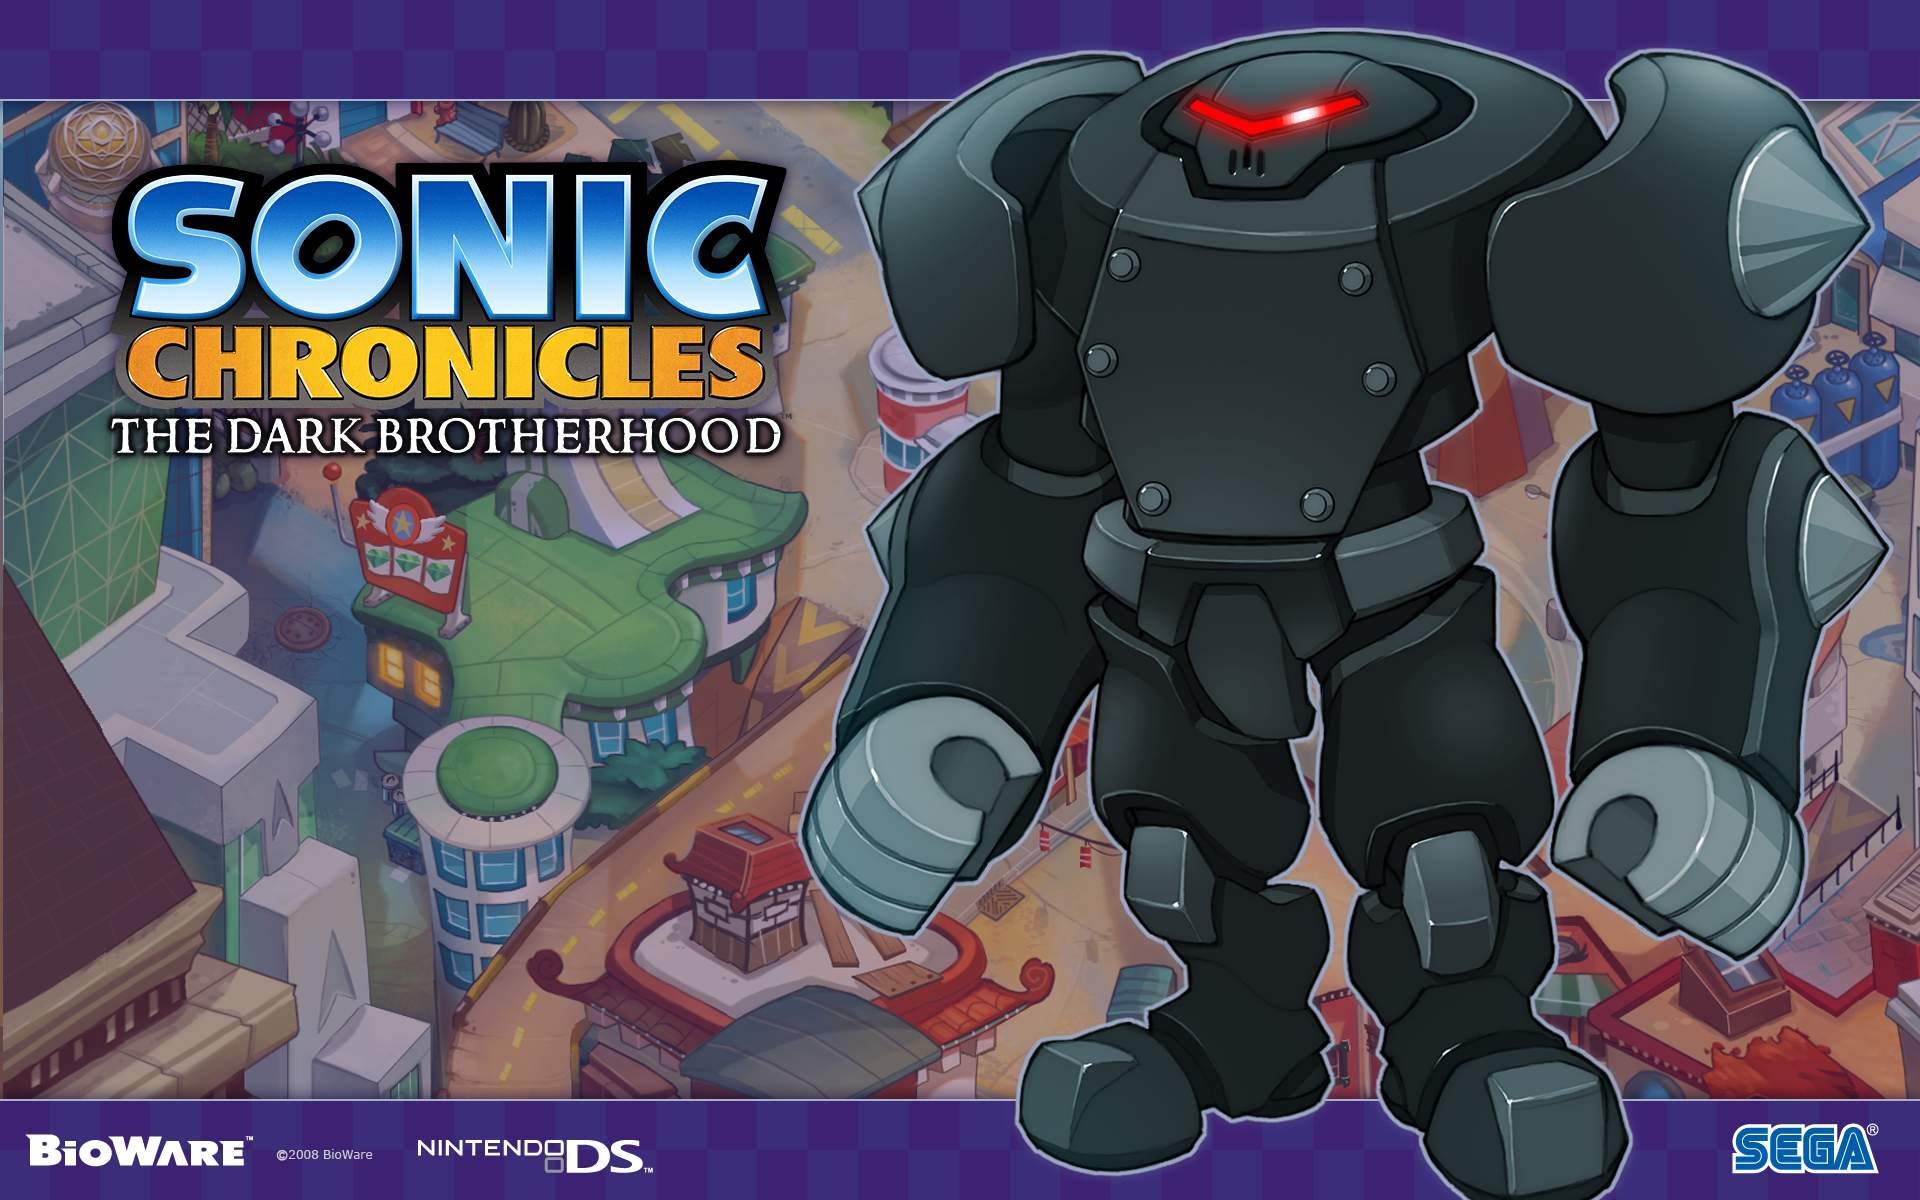 General 1920x1200 video games 2008 (Year) Sonic the Hedgehog Sonic Chronicles: The Dark Brotherhood Bioware Nintendo DS Sega video game characters